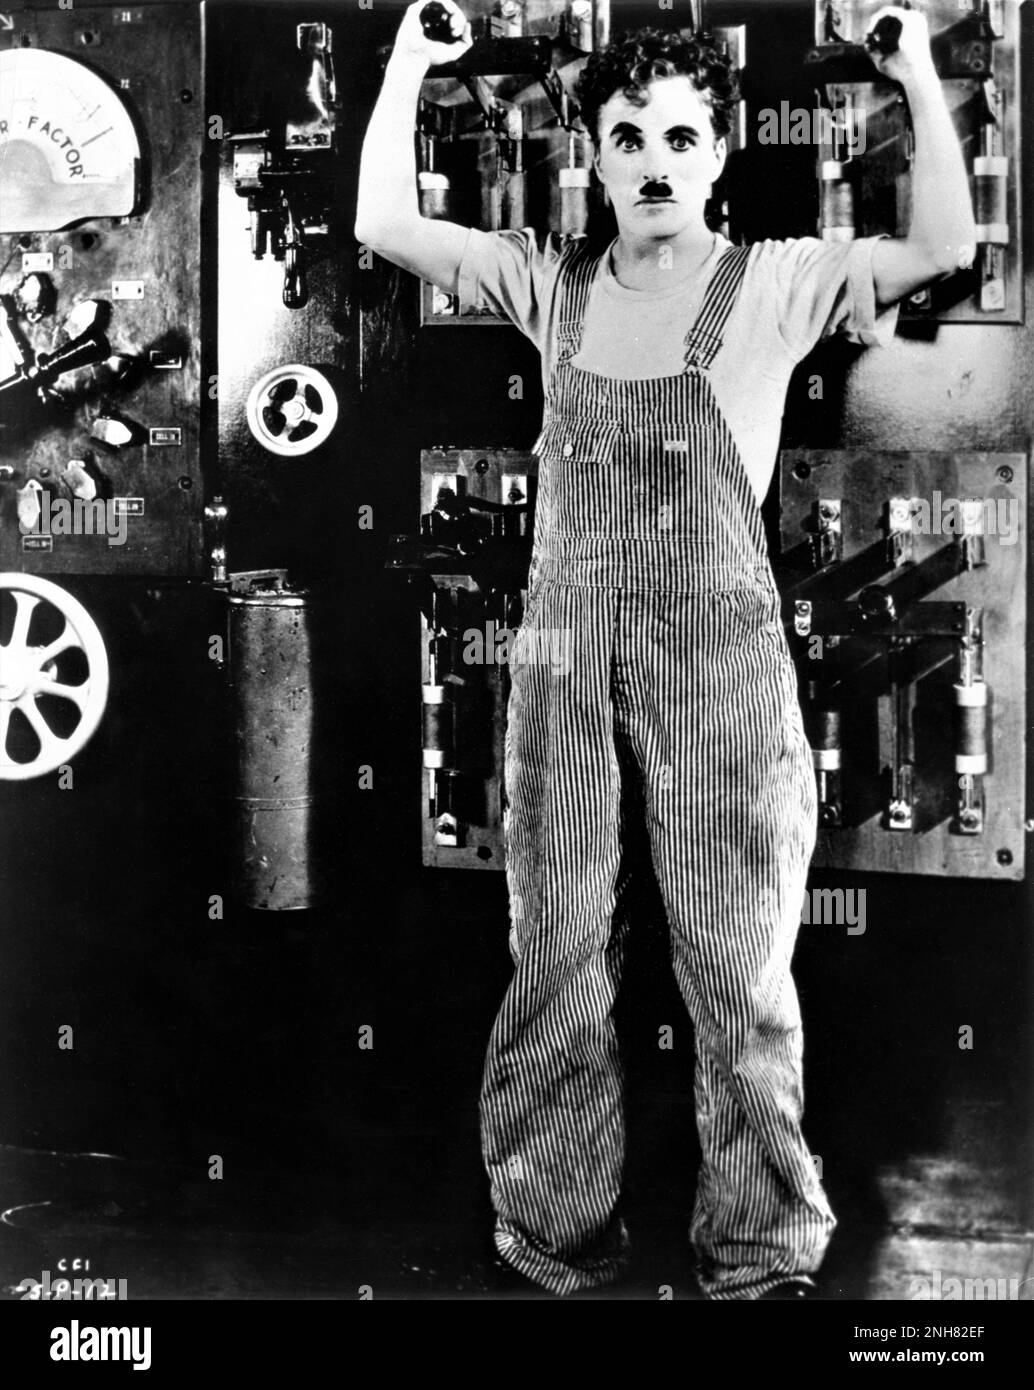 CHARLIE CHAPLIN in MODERN TIMES 1936 regista / scrittore / produttore / musica CHARLES CHAPLIN Silent film con effetti sonori Charles Chaplin Productions / United Artists Foto Stock